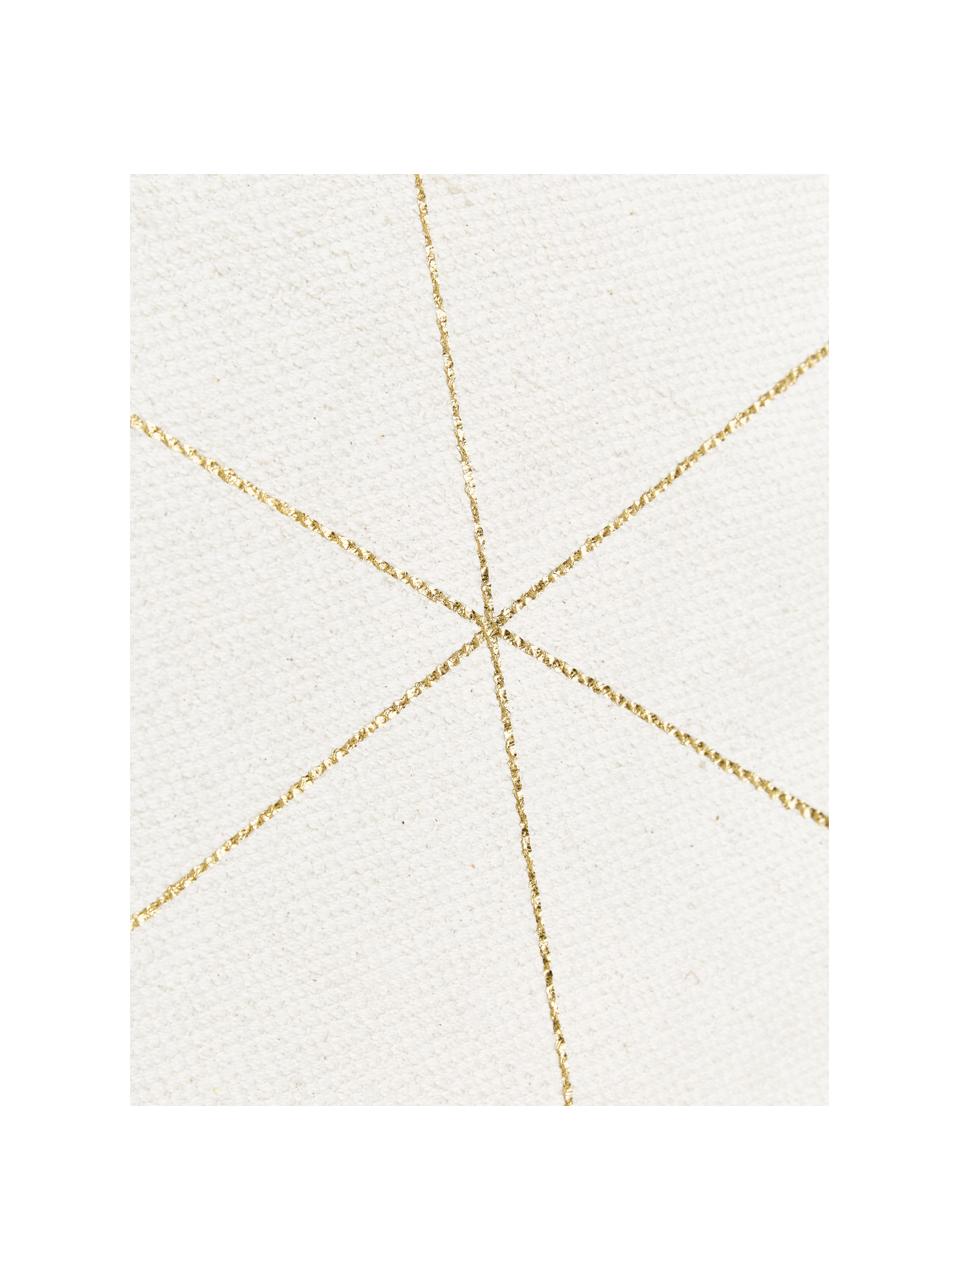 Passatoia in cotone beige/dorato tessuta piatta Yena, Beige, oro, Larg. 80 x Lung. 250 cm